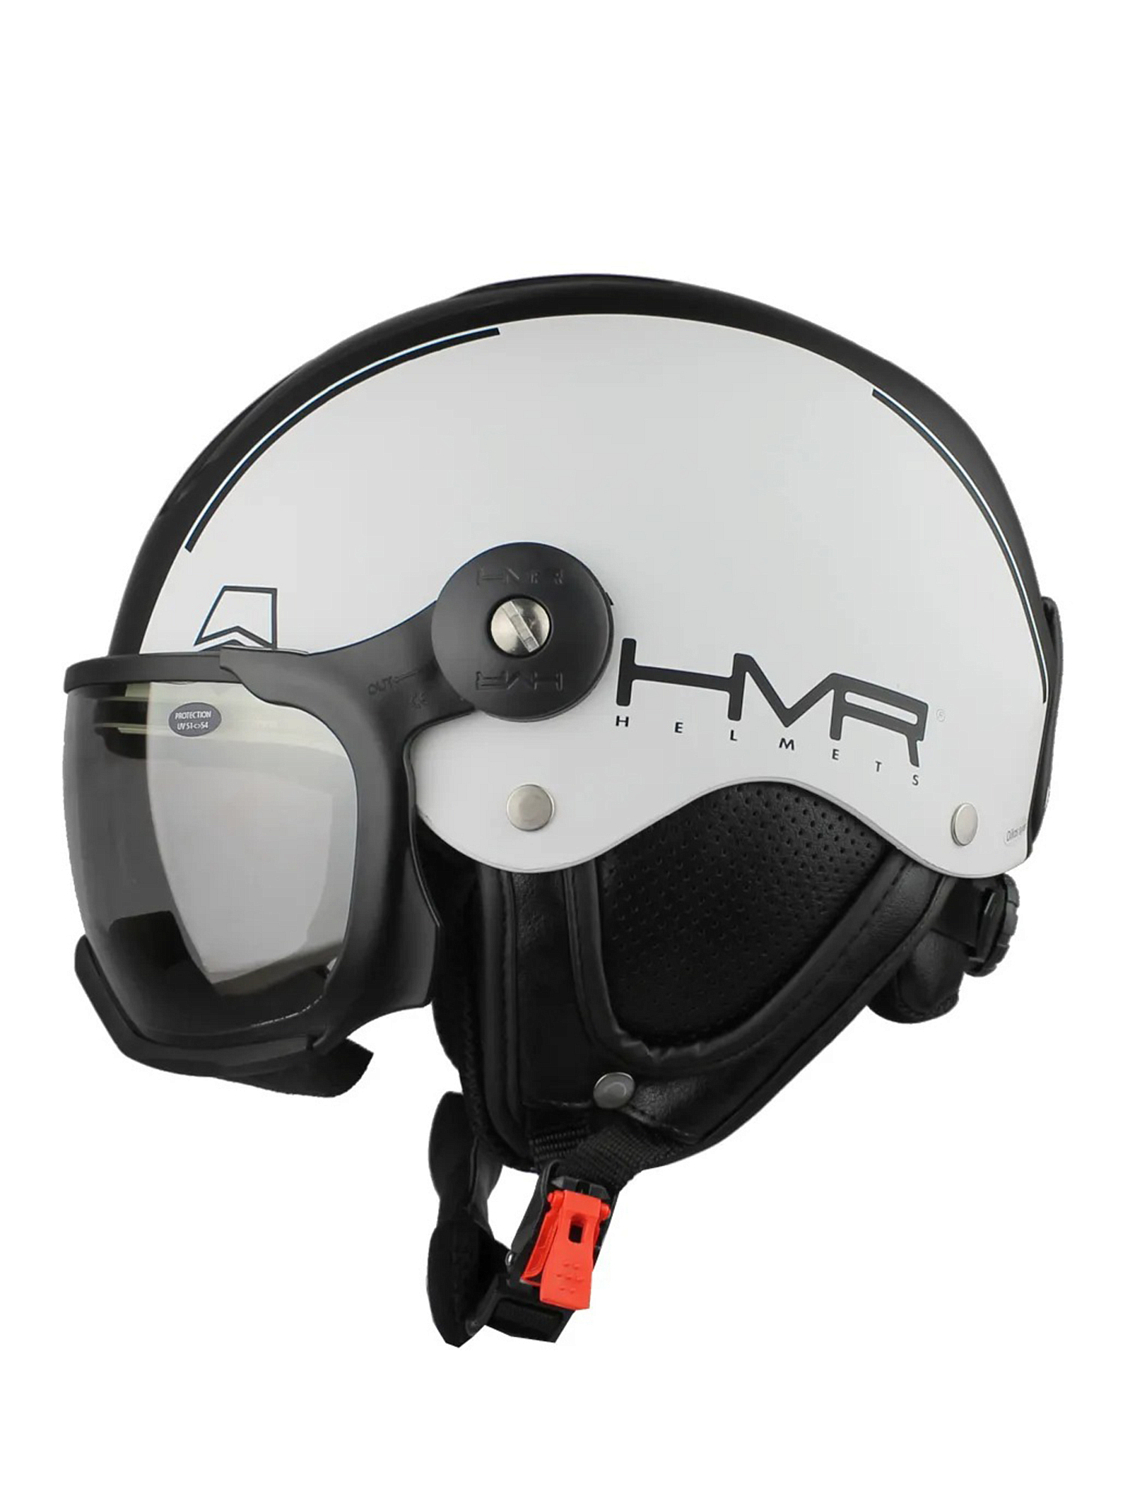 Шлем с визором HMR Z1 Nero Bianco